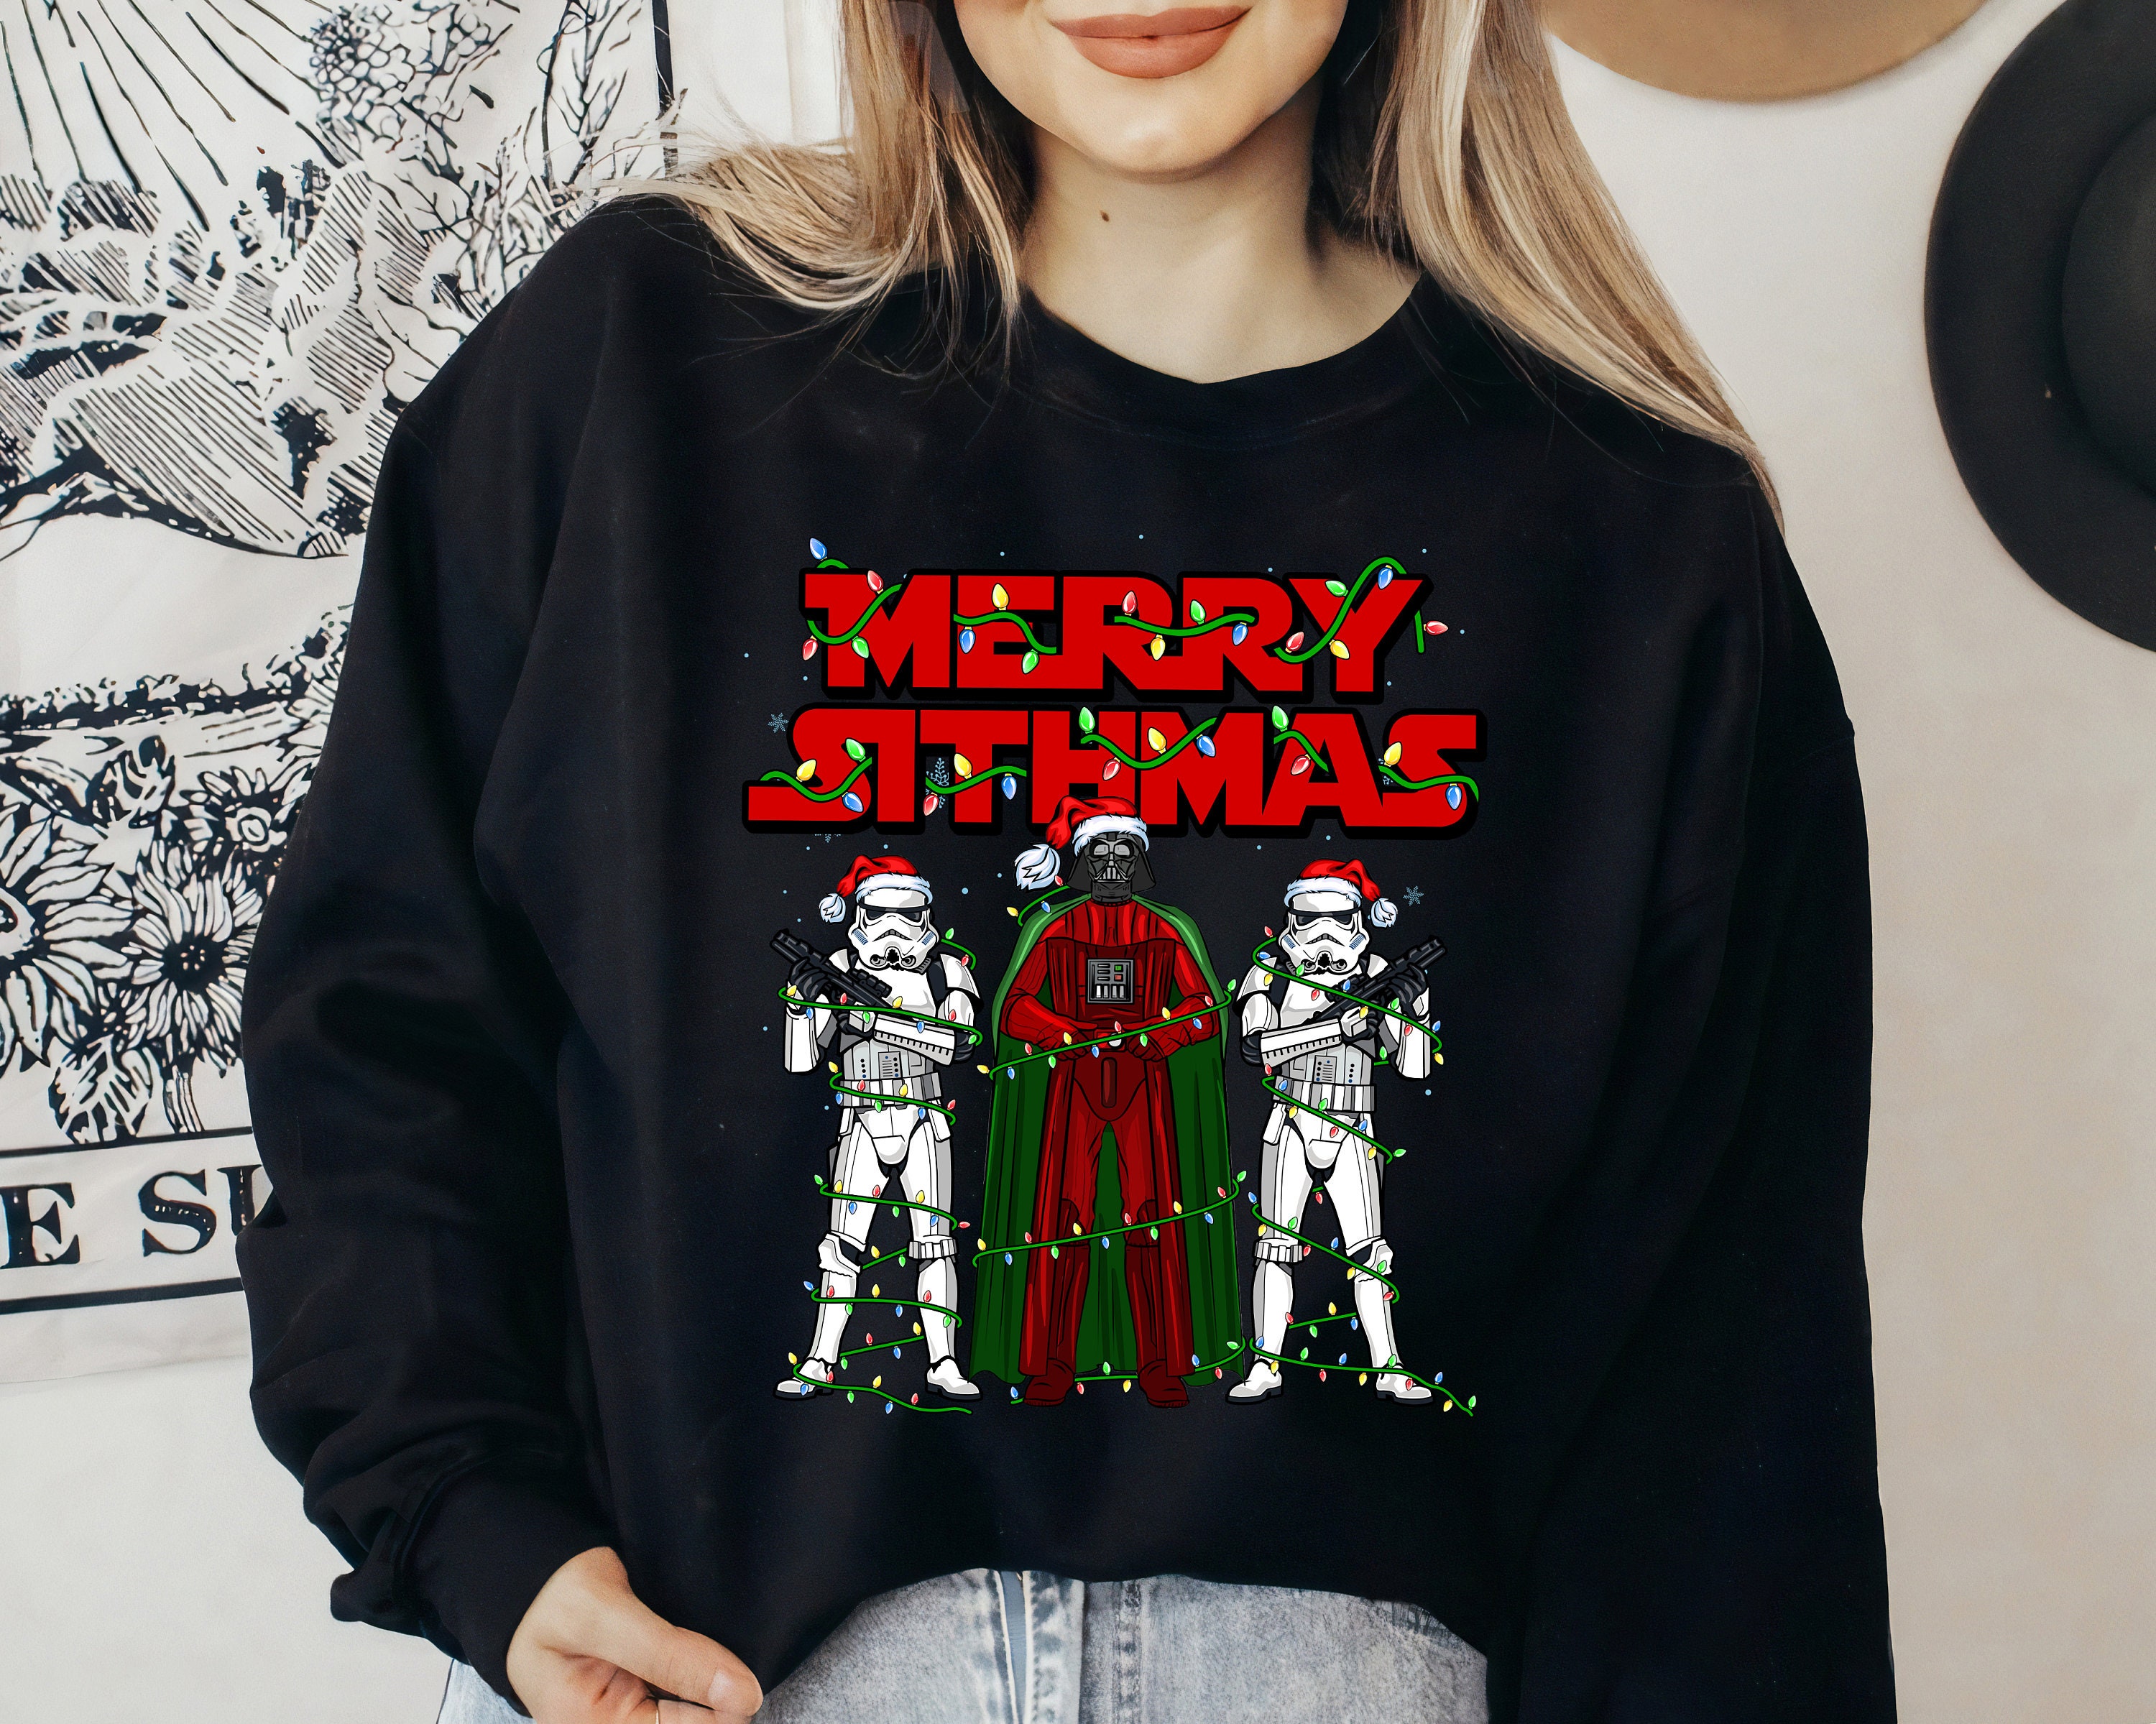 Discover Star Wars Christmas Merry Sithmas Sweatshirt, Darth Vader Stormtrooper Christmas Lights